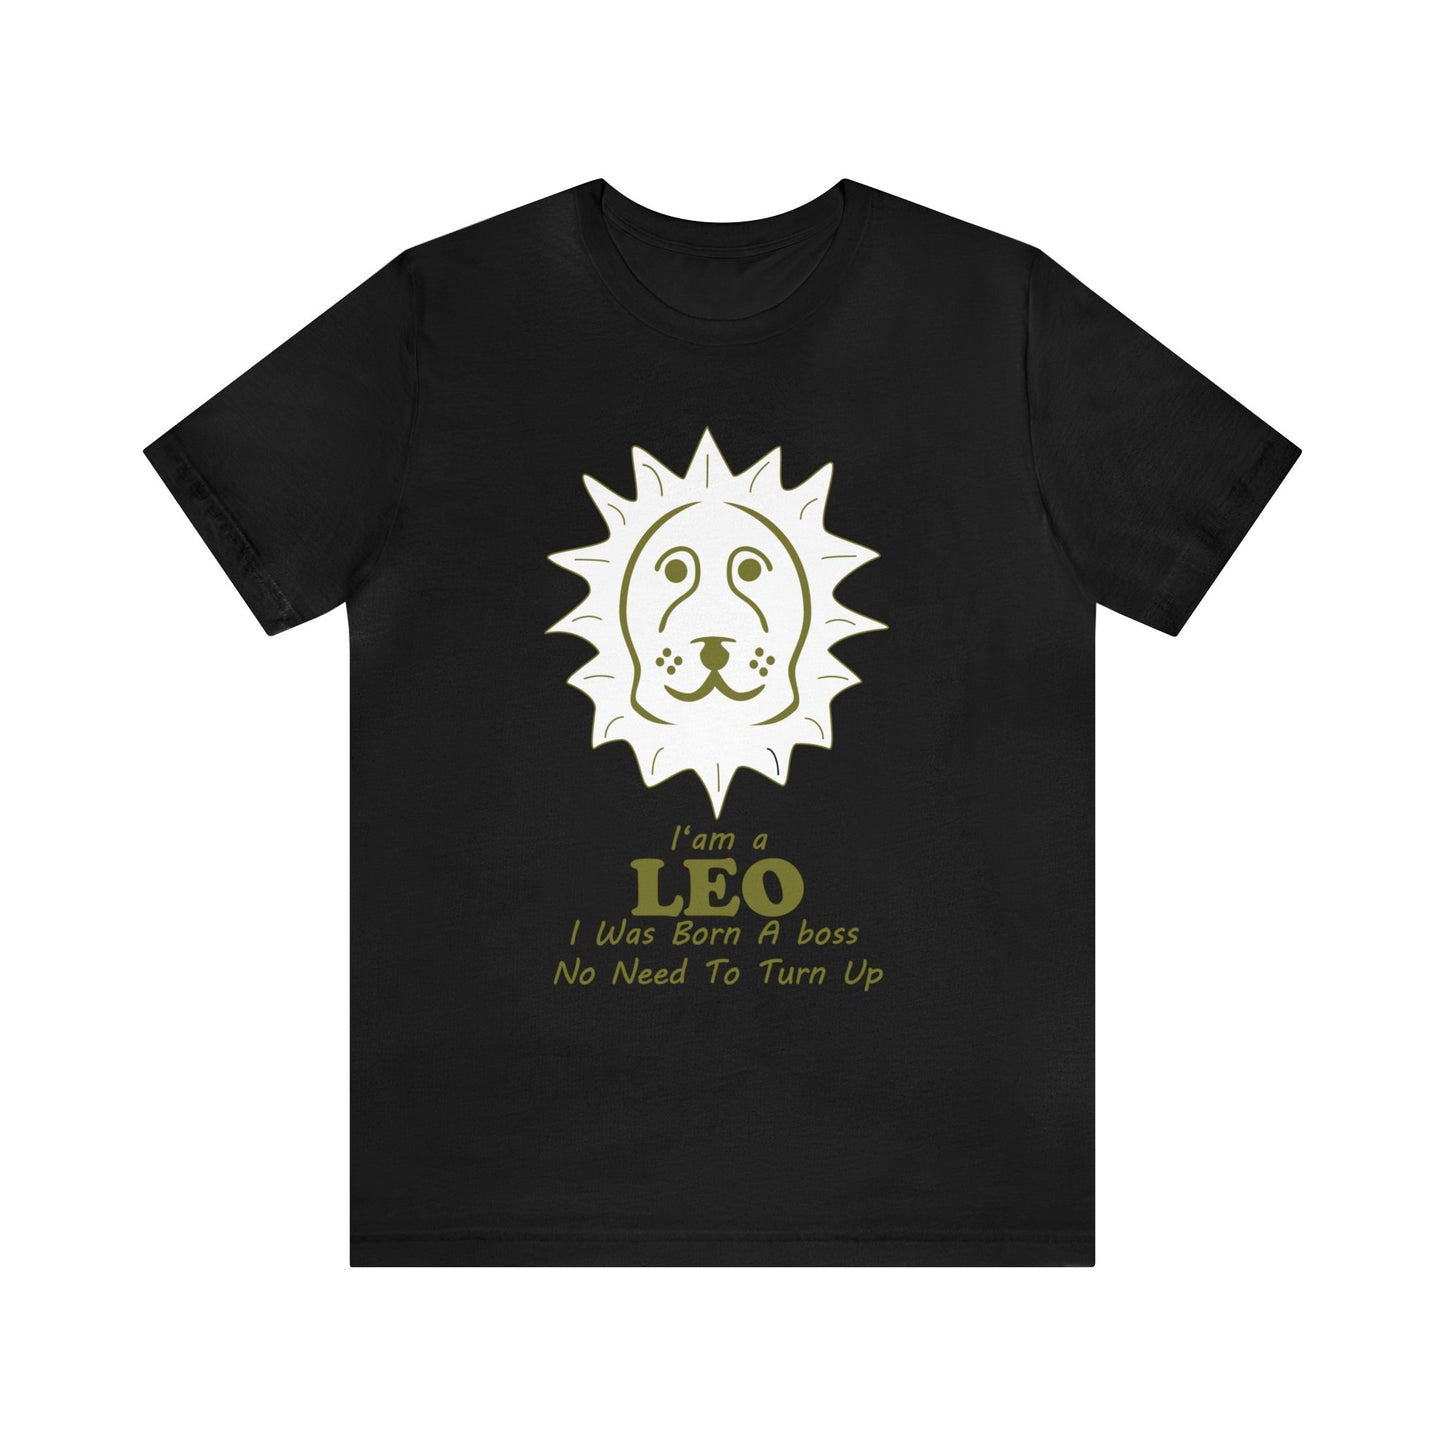 Leo Tee